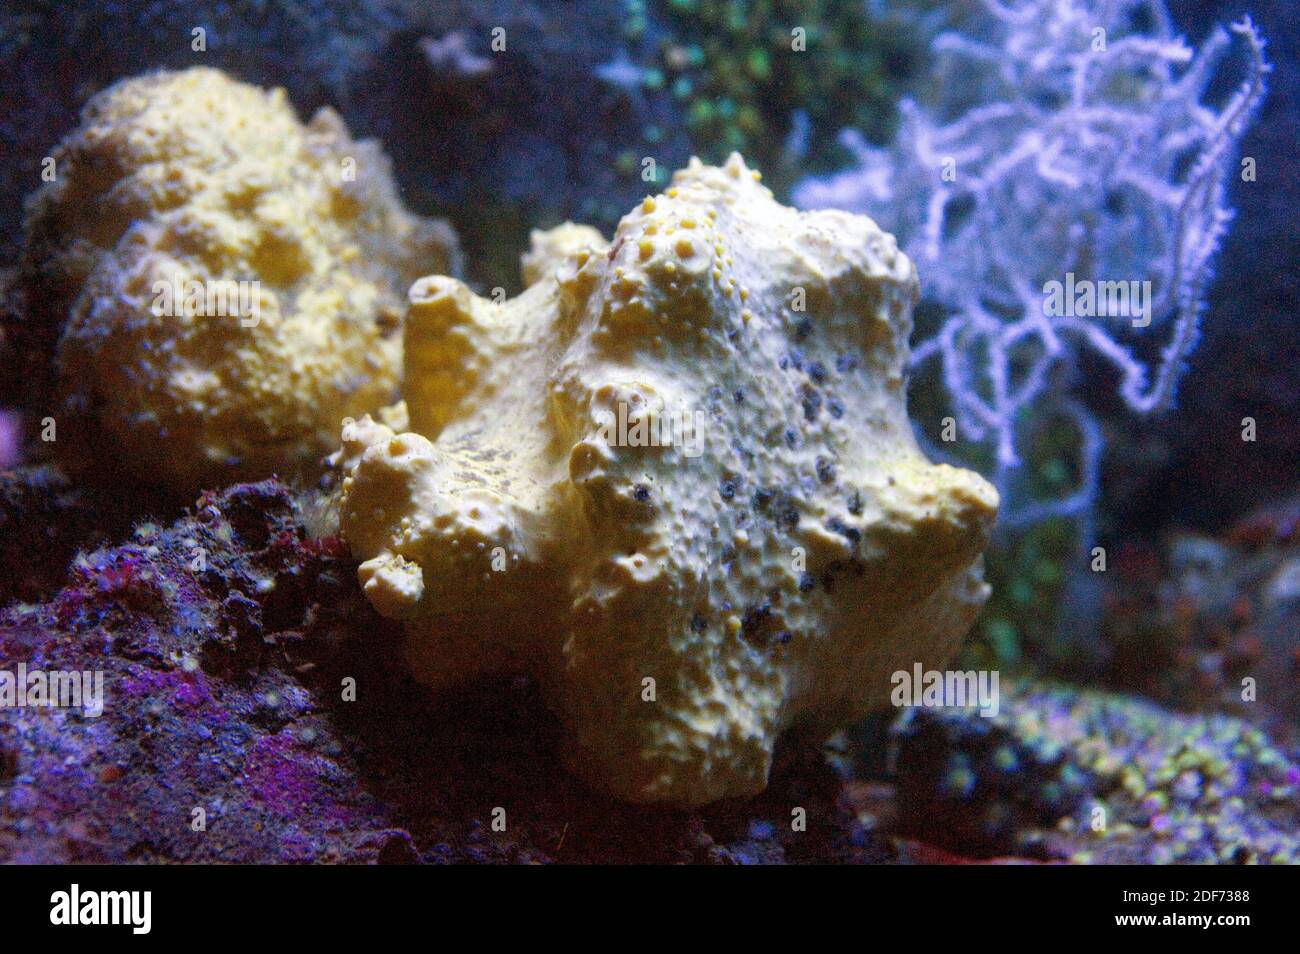 Cliona celata is a sea sponge in the class Demospongiae. Stock Photo